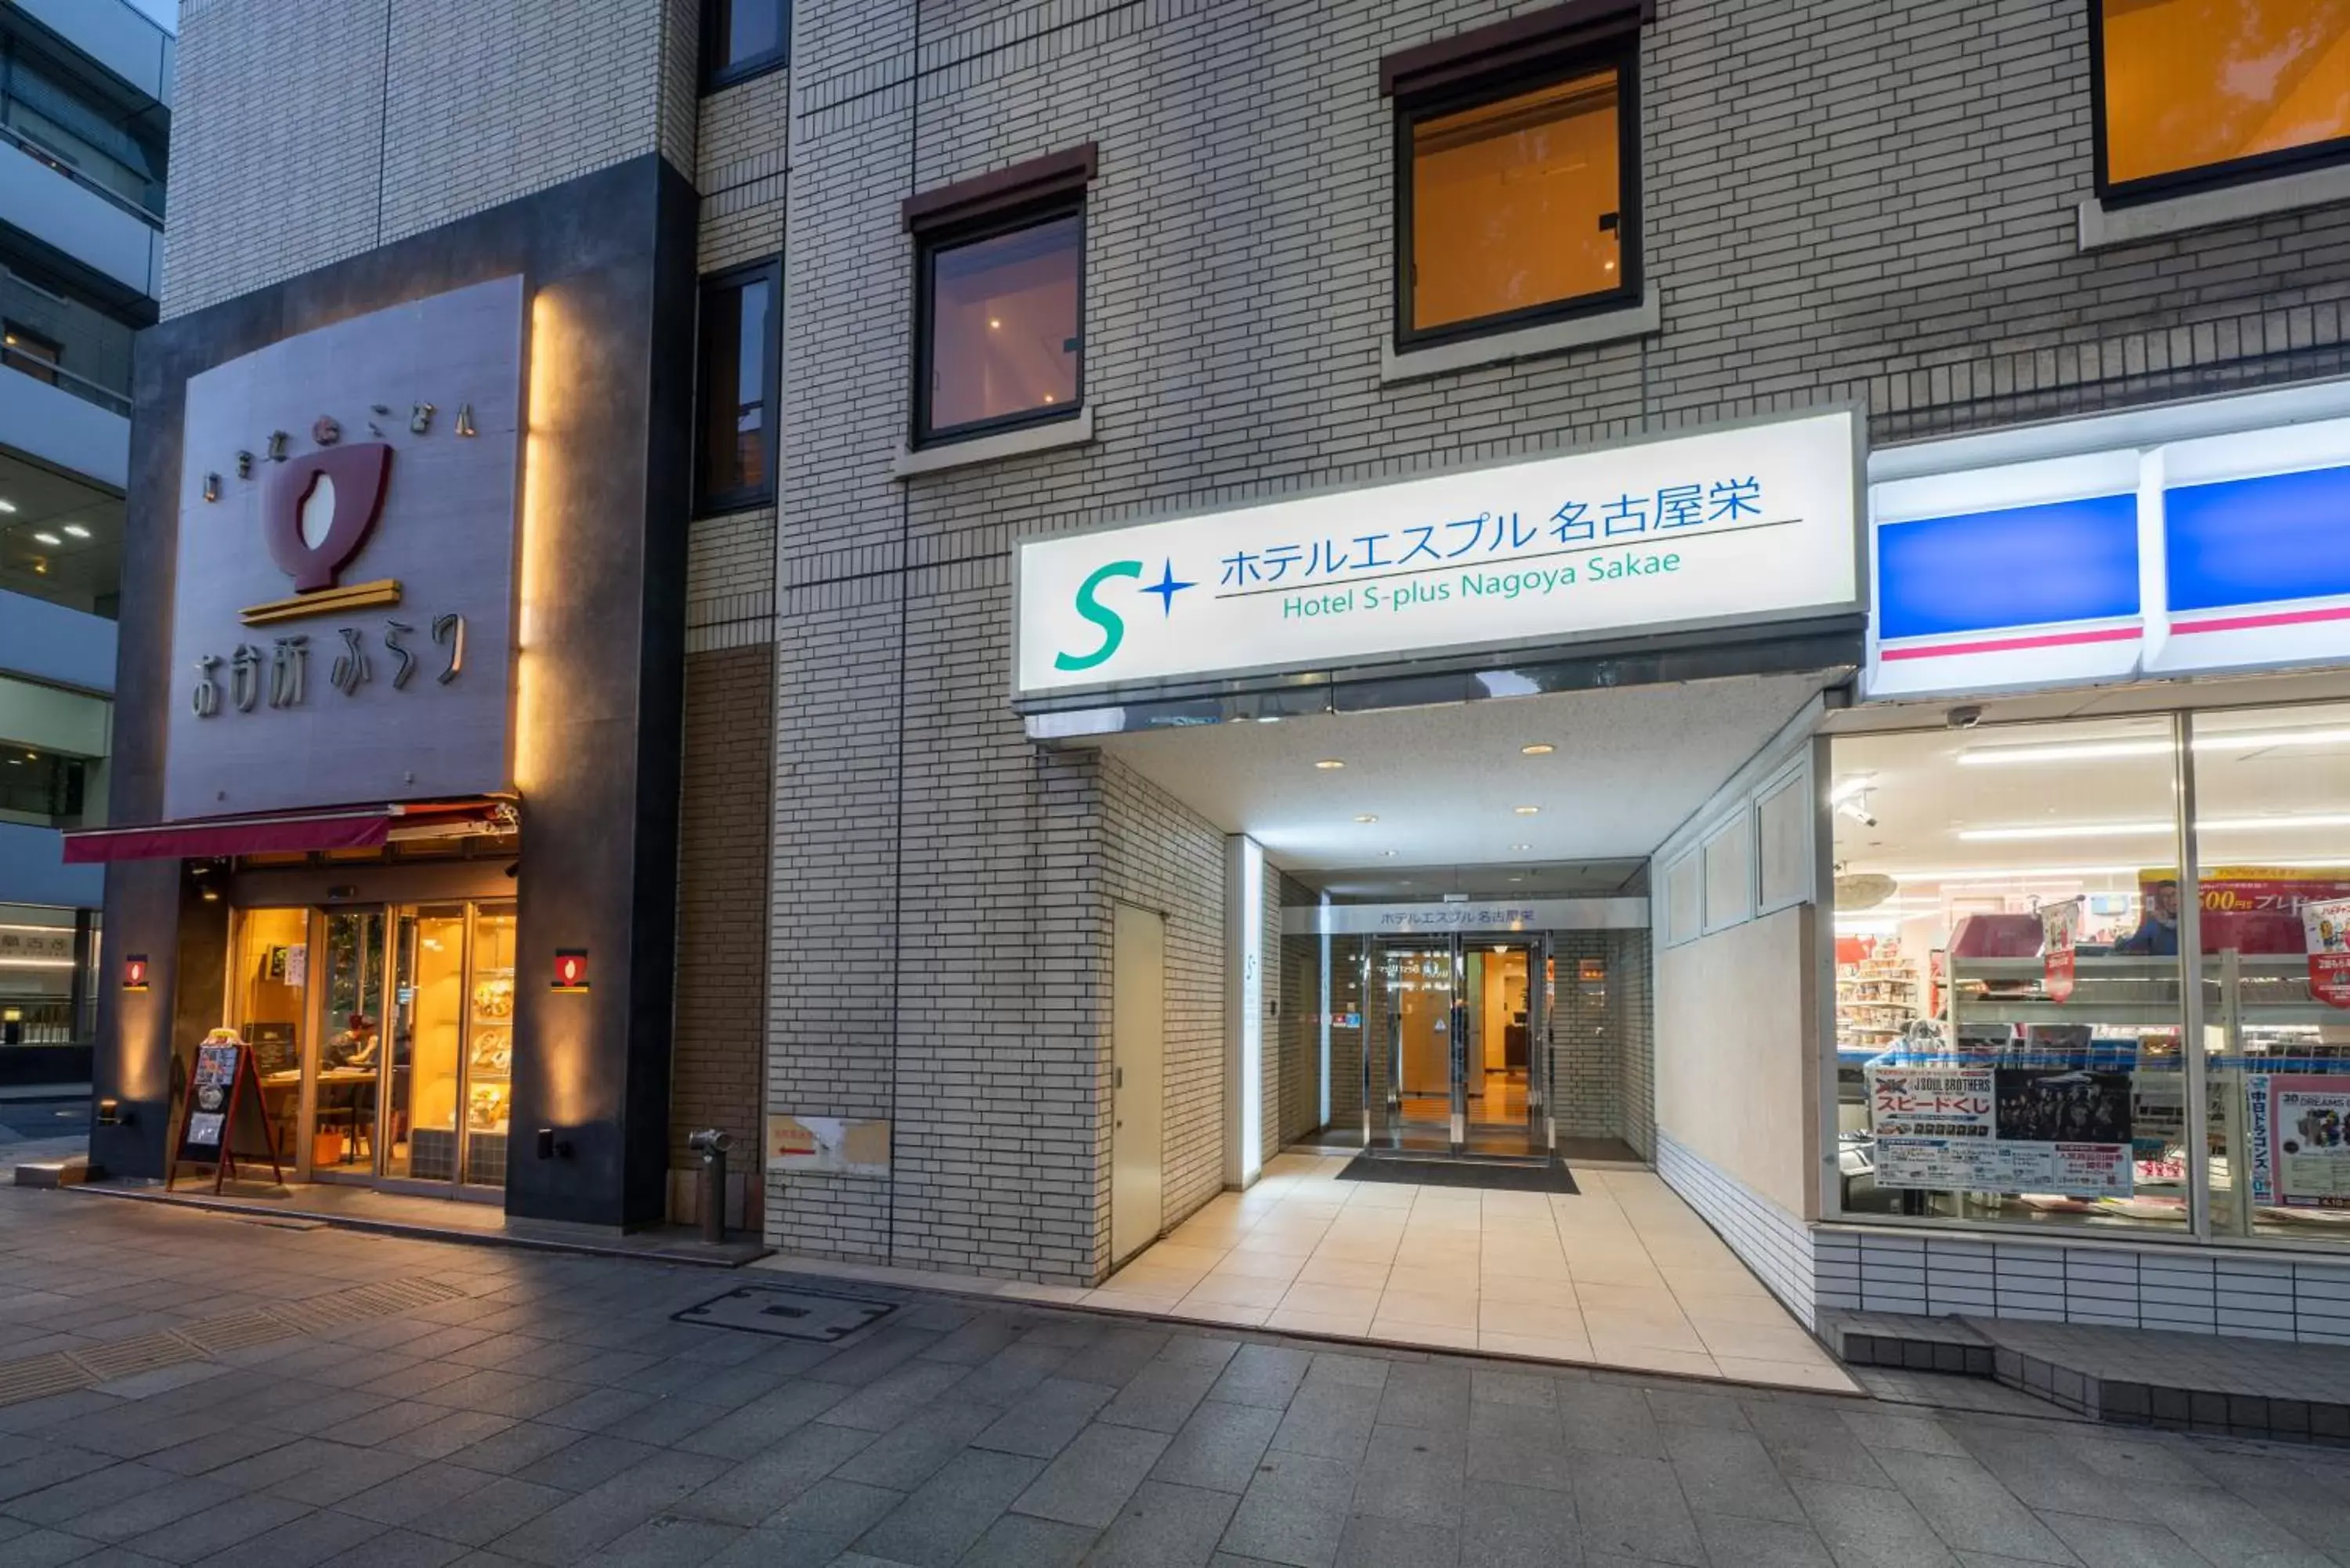 Facade/entrance in Hotel S-plus Nagoya Sakae